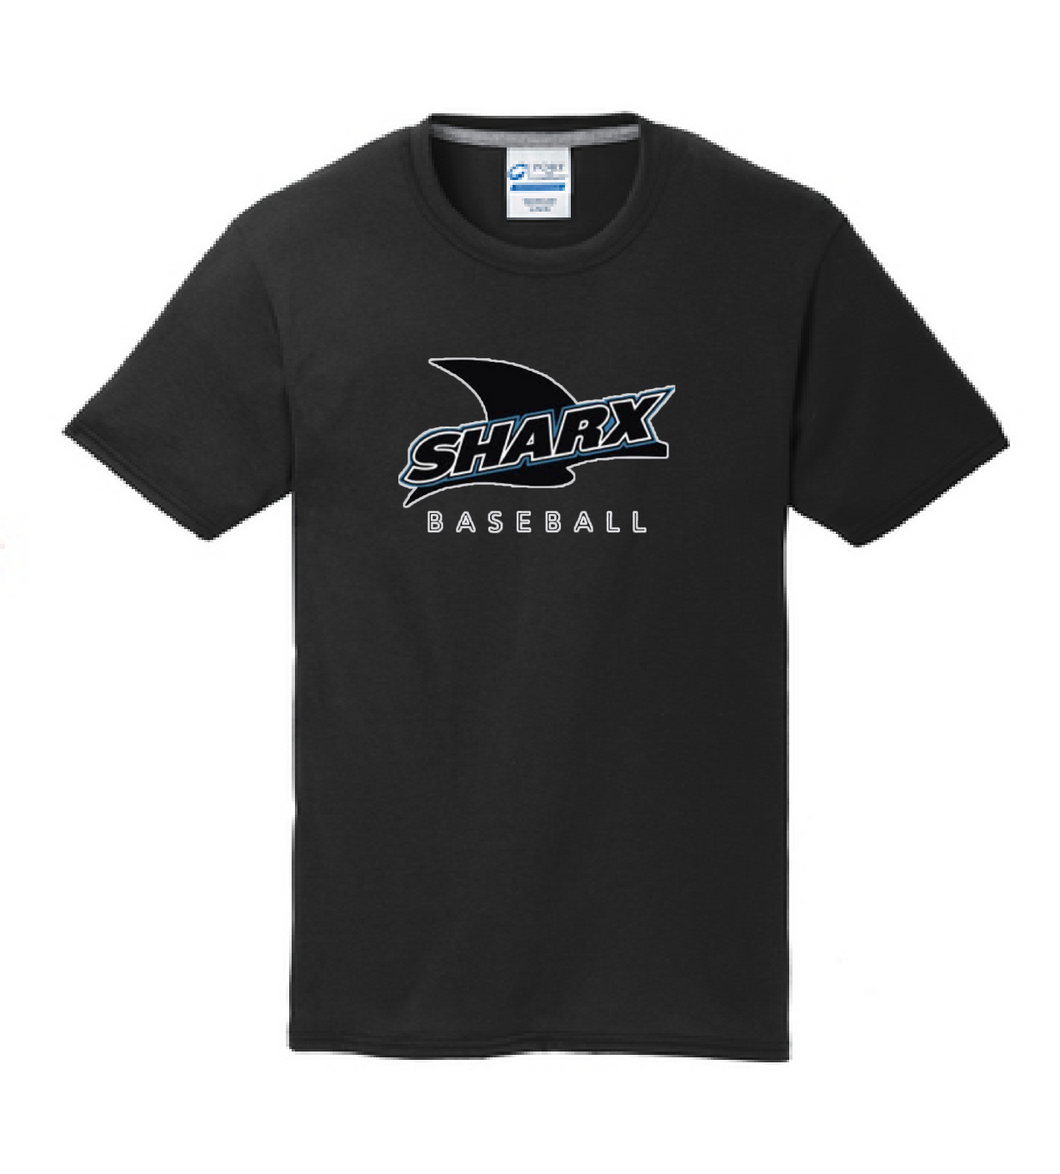 Short Sleeve Cotton T-shirt / Jet Black / Sharx Baseball - Fidgety